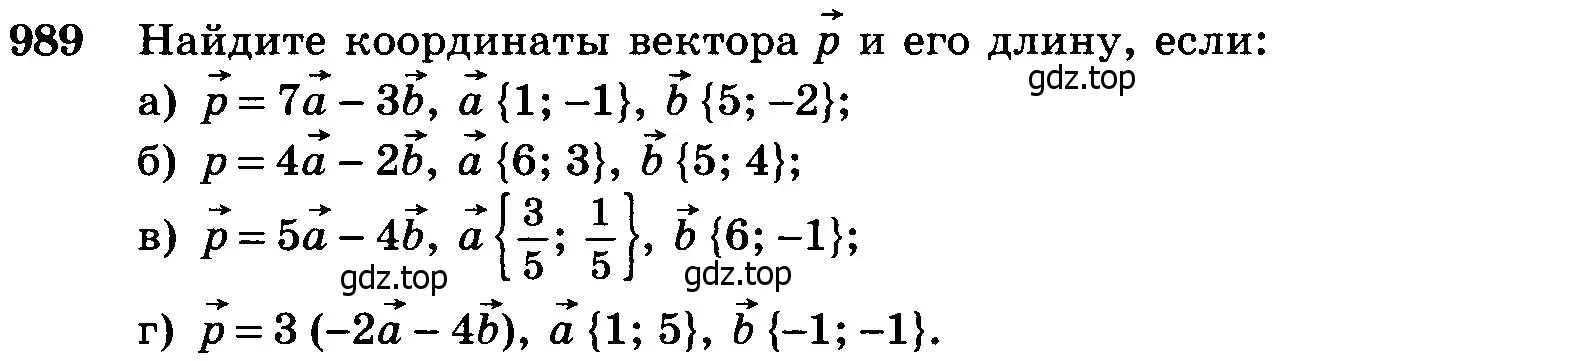 Условие номер 989 (страница 245) гдз по геометрии 7-9 класс Атанасян, Бутузов, учебник